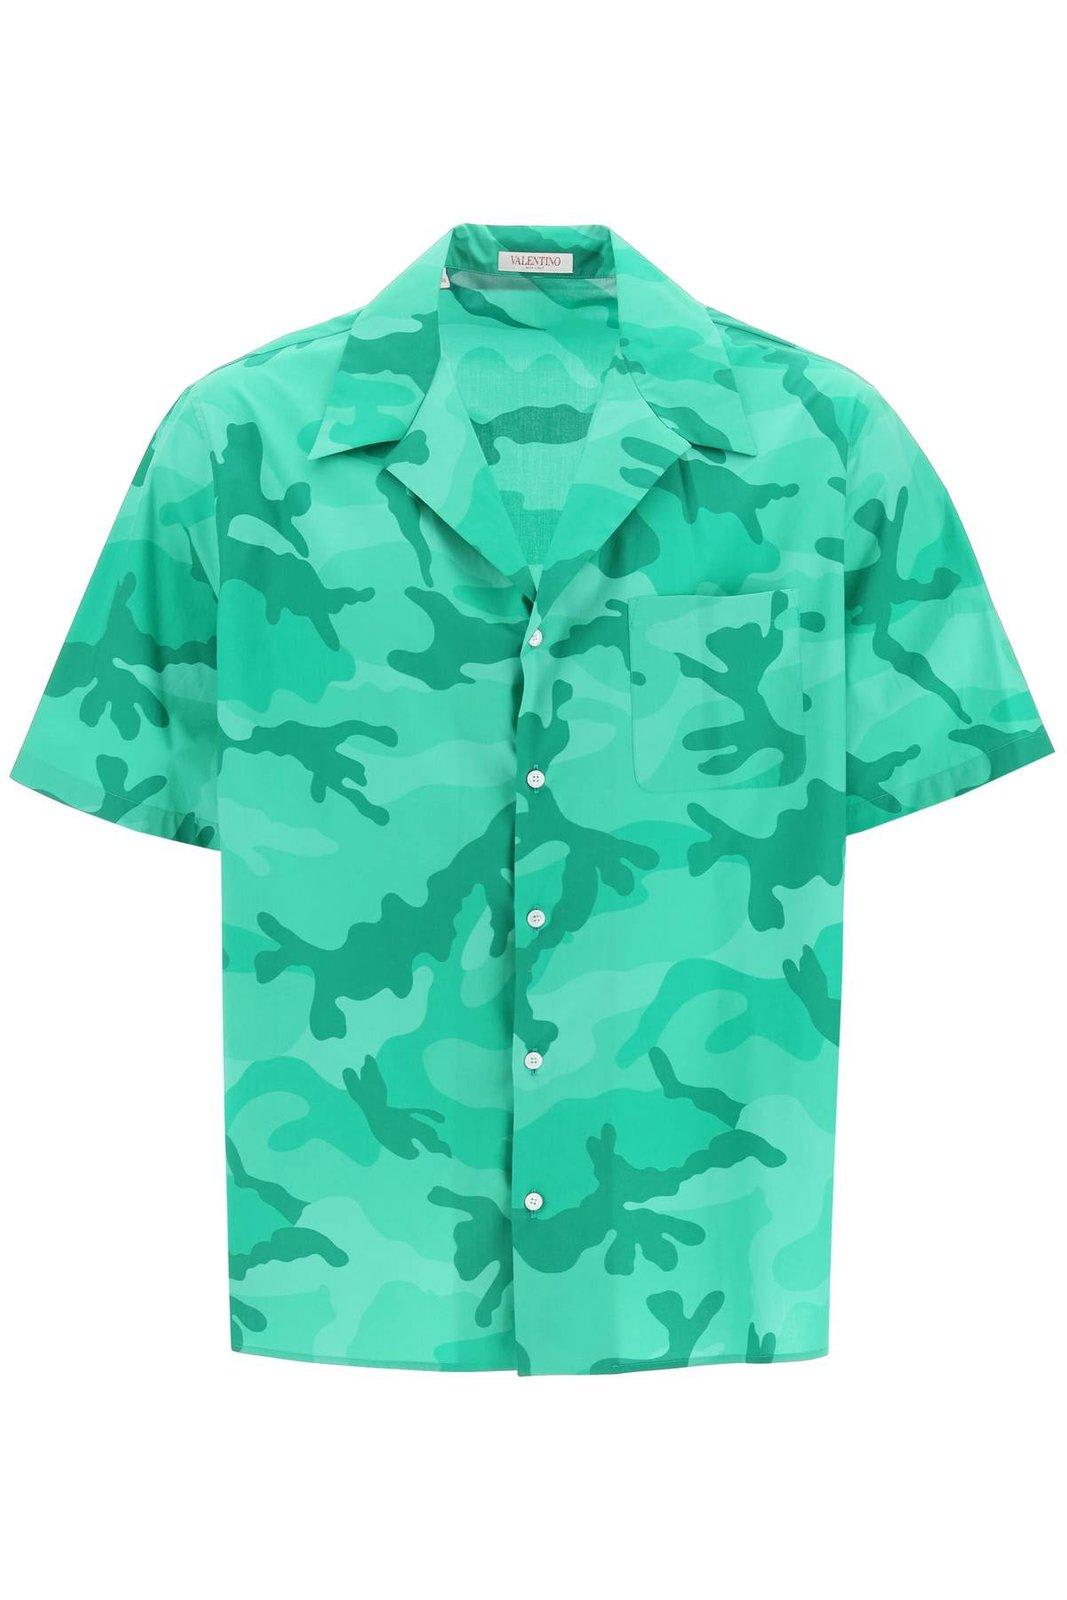 Valentino Camouflage Printed Short-sleeved Shirt